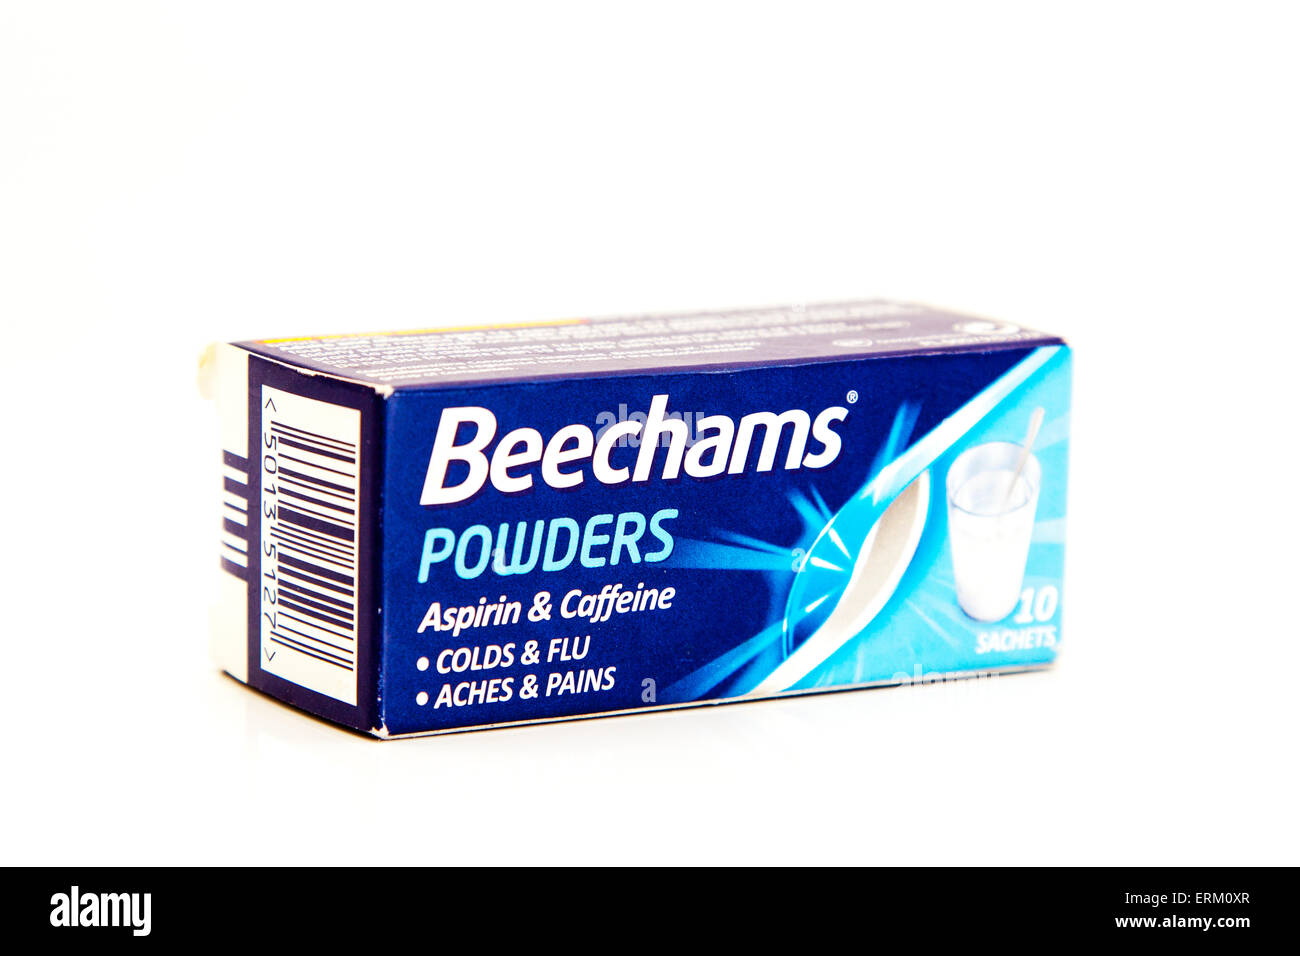 Beechams Pulver Aspirin & Kofein kalt Erkältungen Grippe Schmerzen Schmerzen Relief Heilmittel Karton Box Pack Paket isolierten Ausschnitt ausschneiden weiß Stockfoto